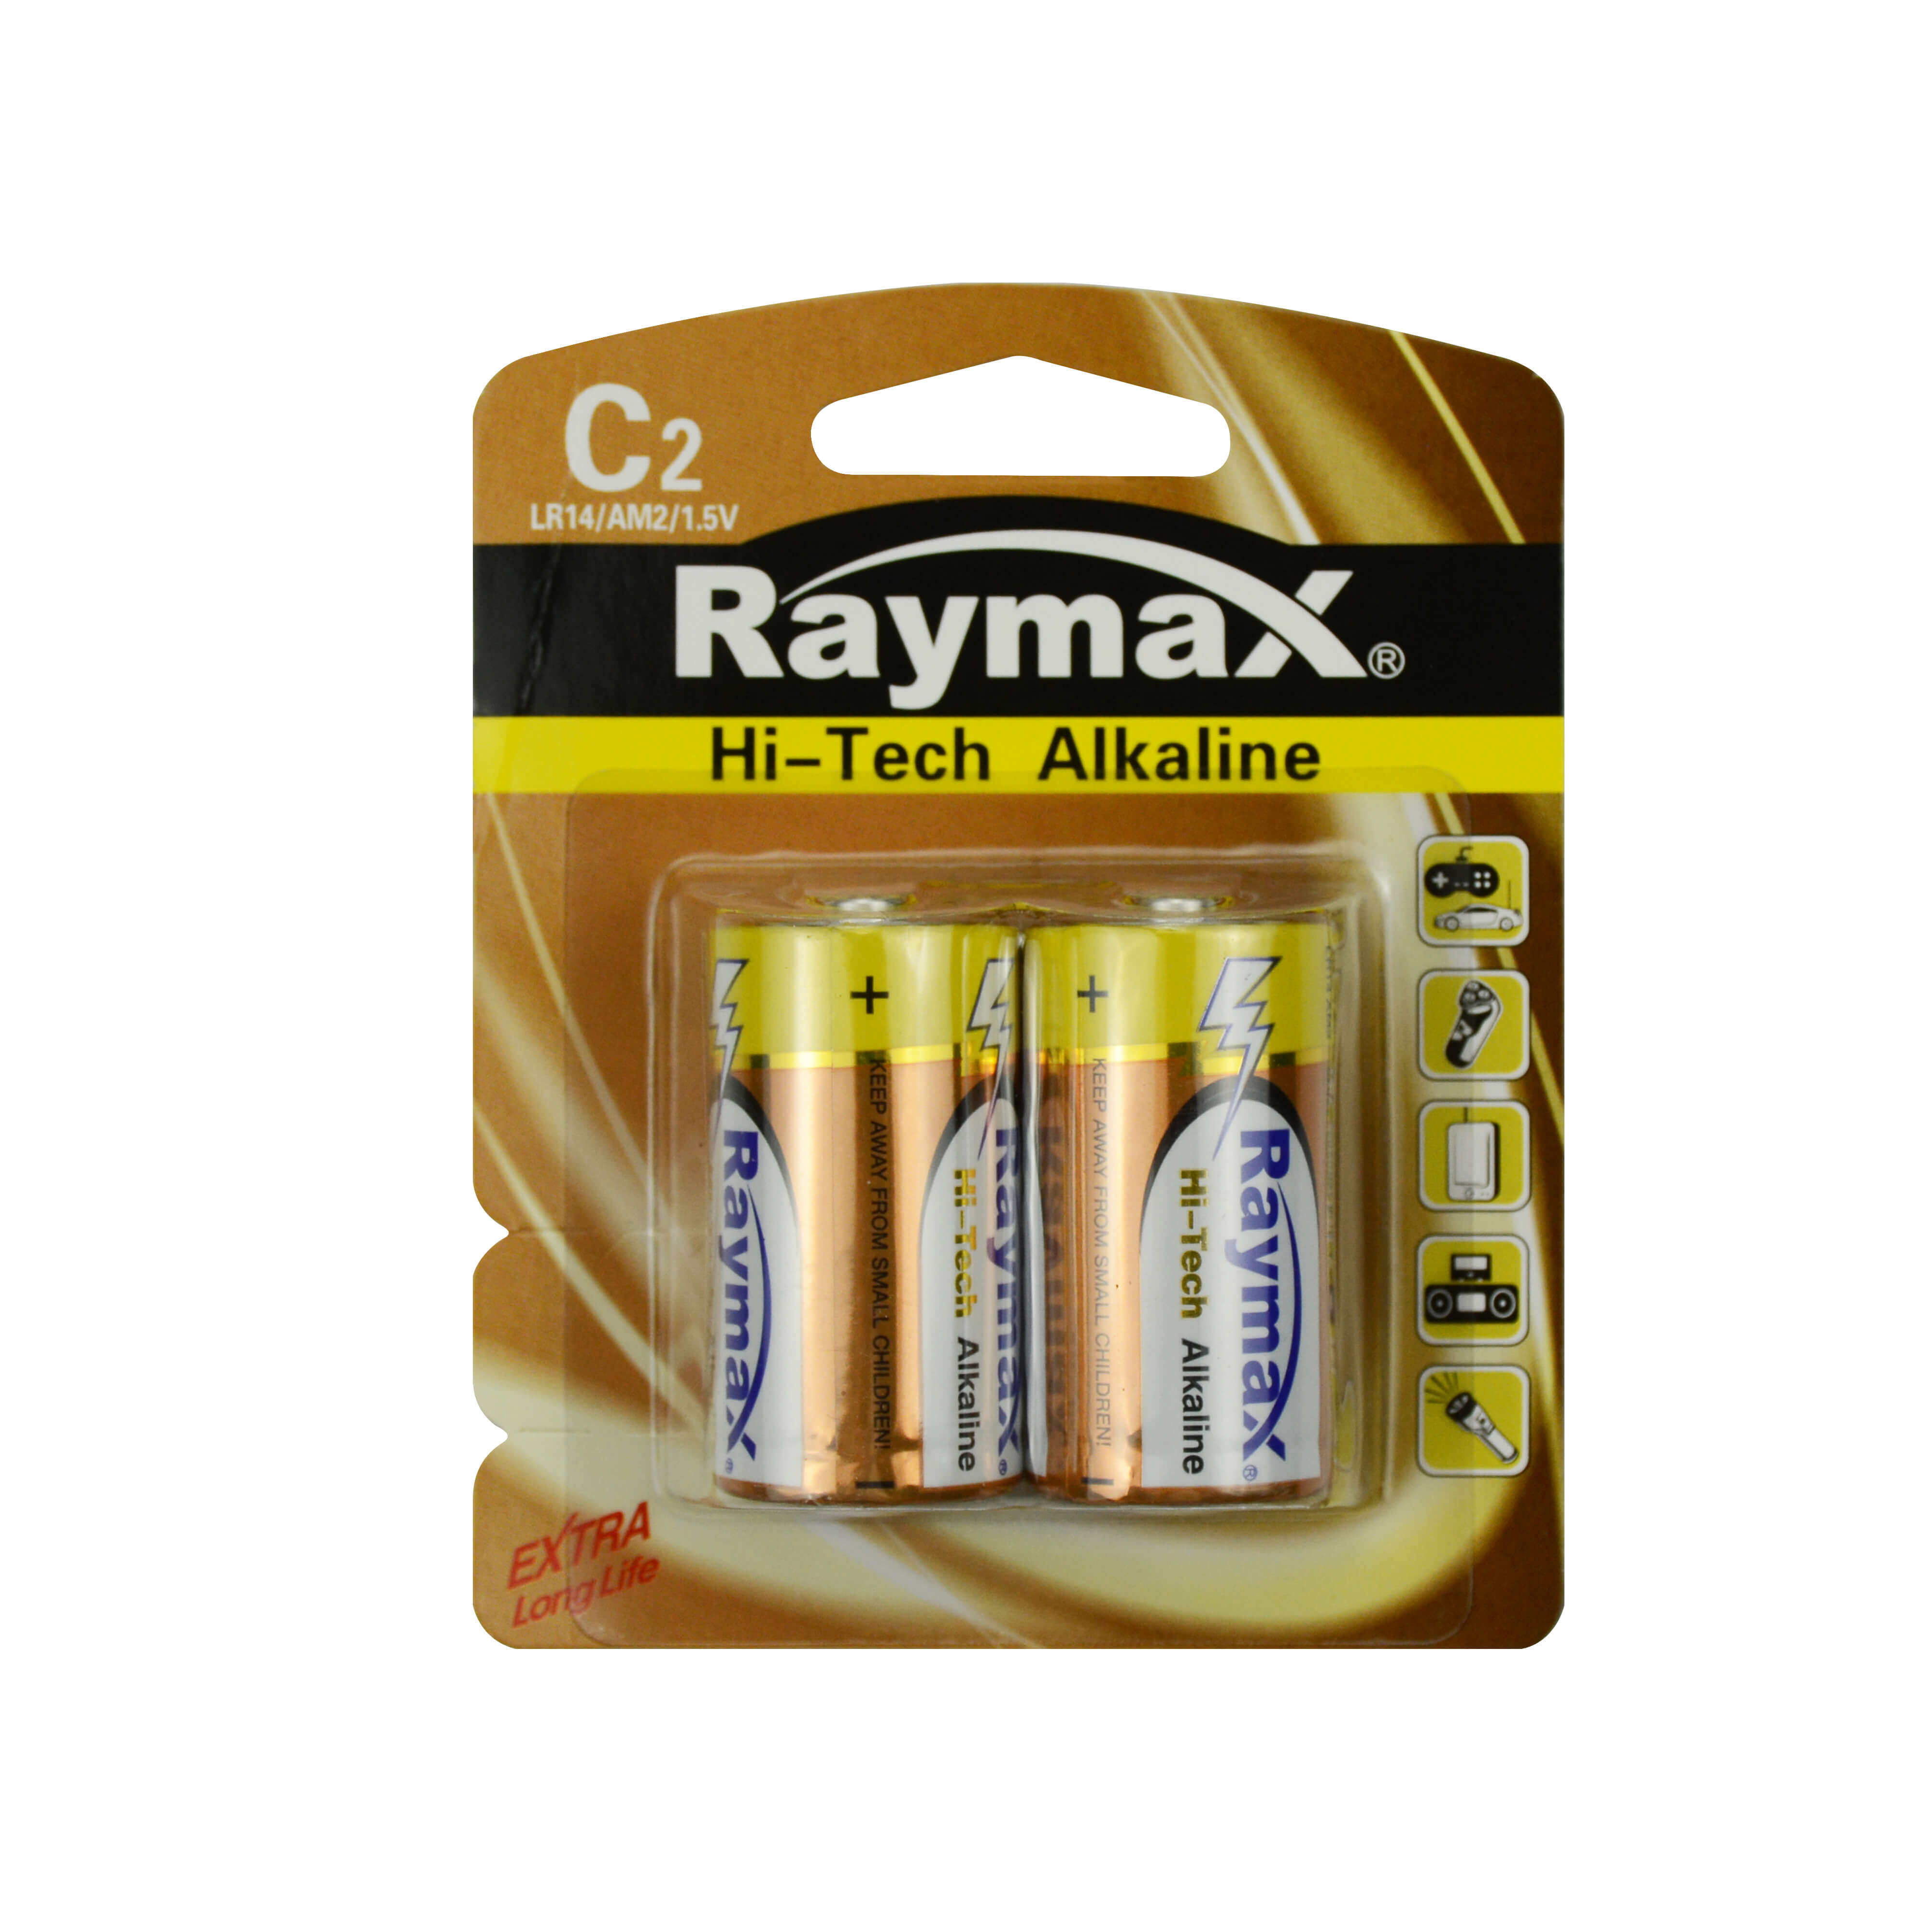 Raymax mercury free hi-tech alkaline battery C type  LR14 2 packs